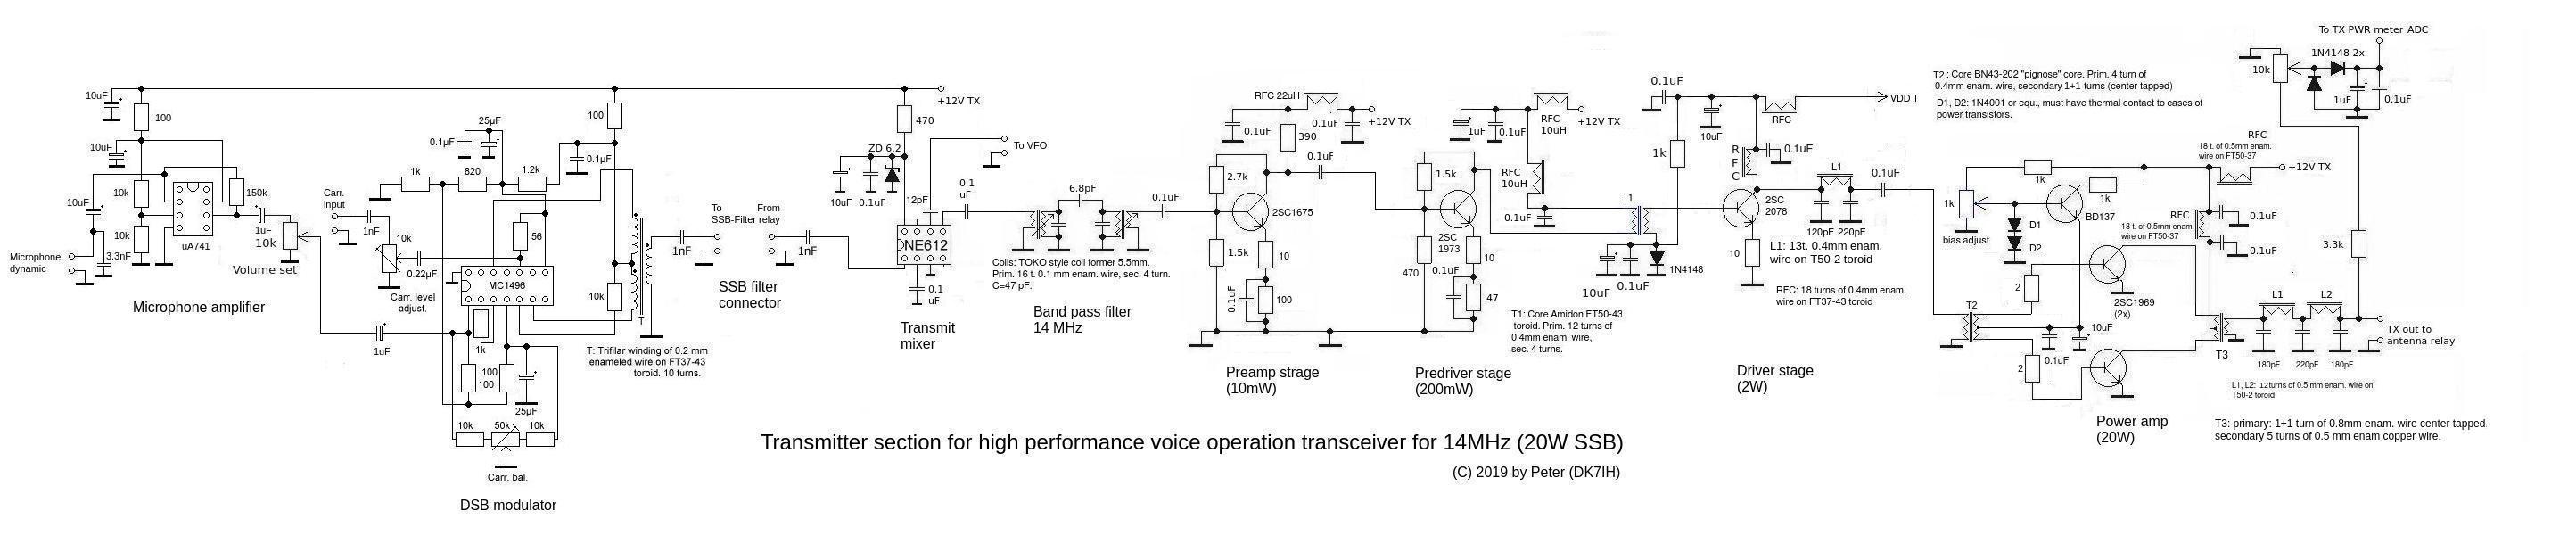 DK7IH - High performance Transceiver - Transmitter section